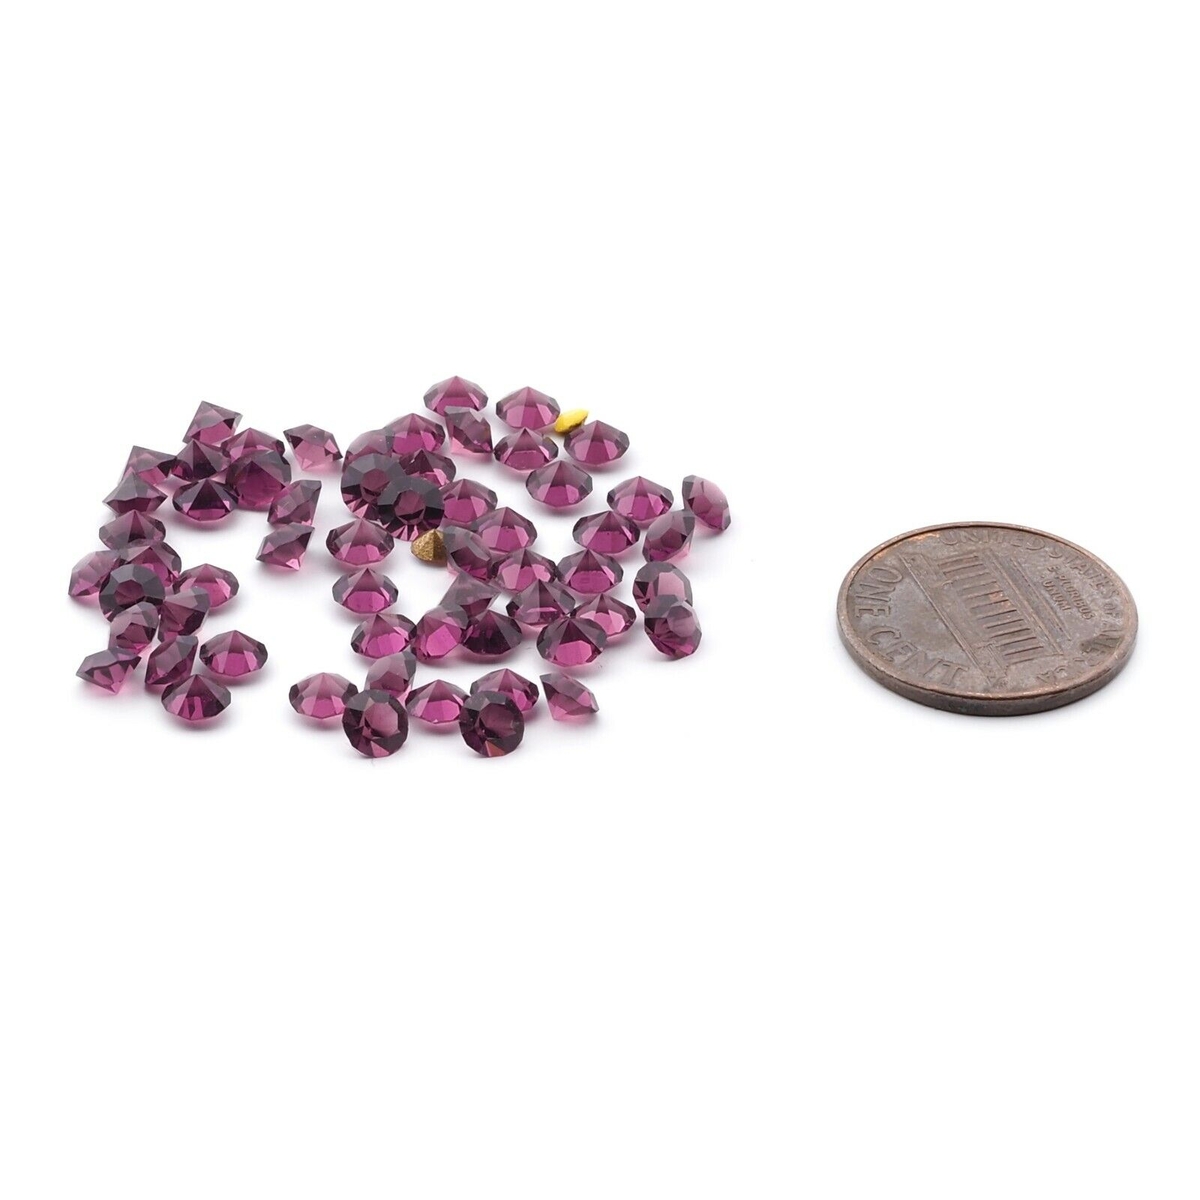 Lot (55) Czech vintage round faceted purple amethyst glass rhinestones 4mm